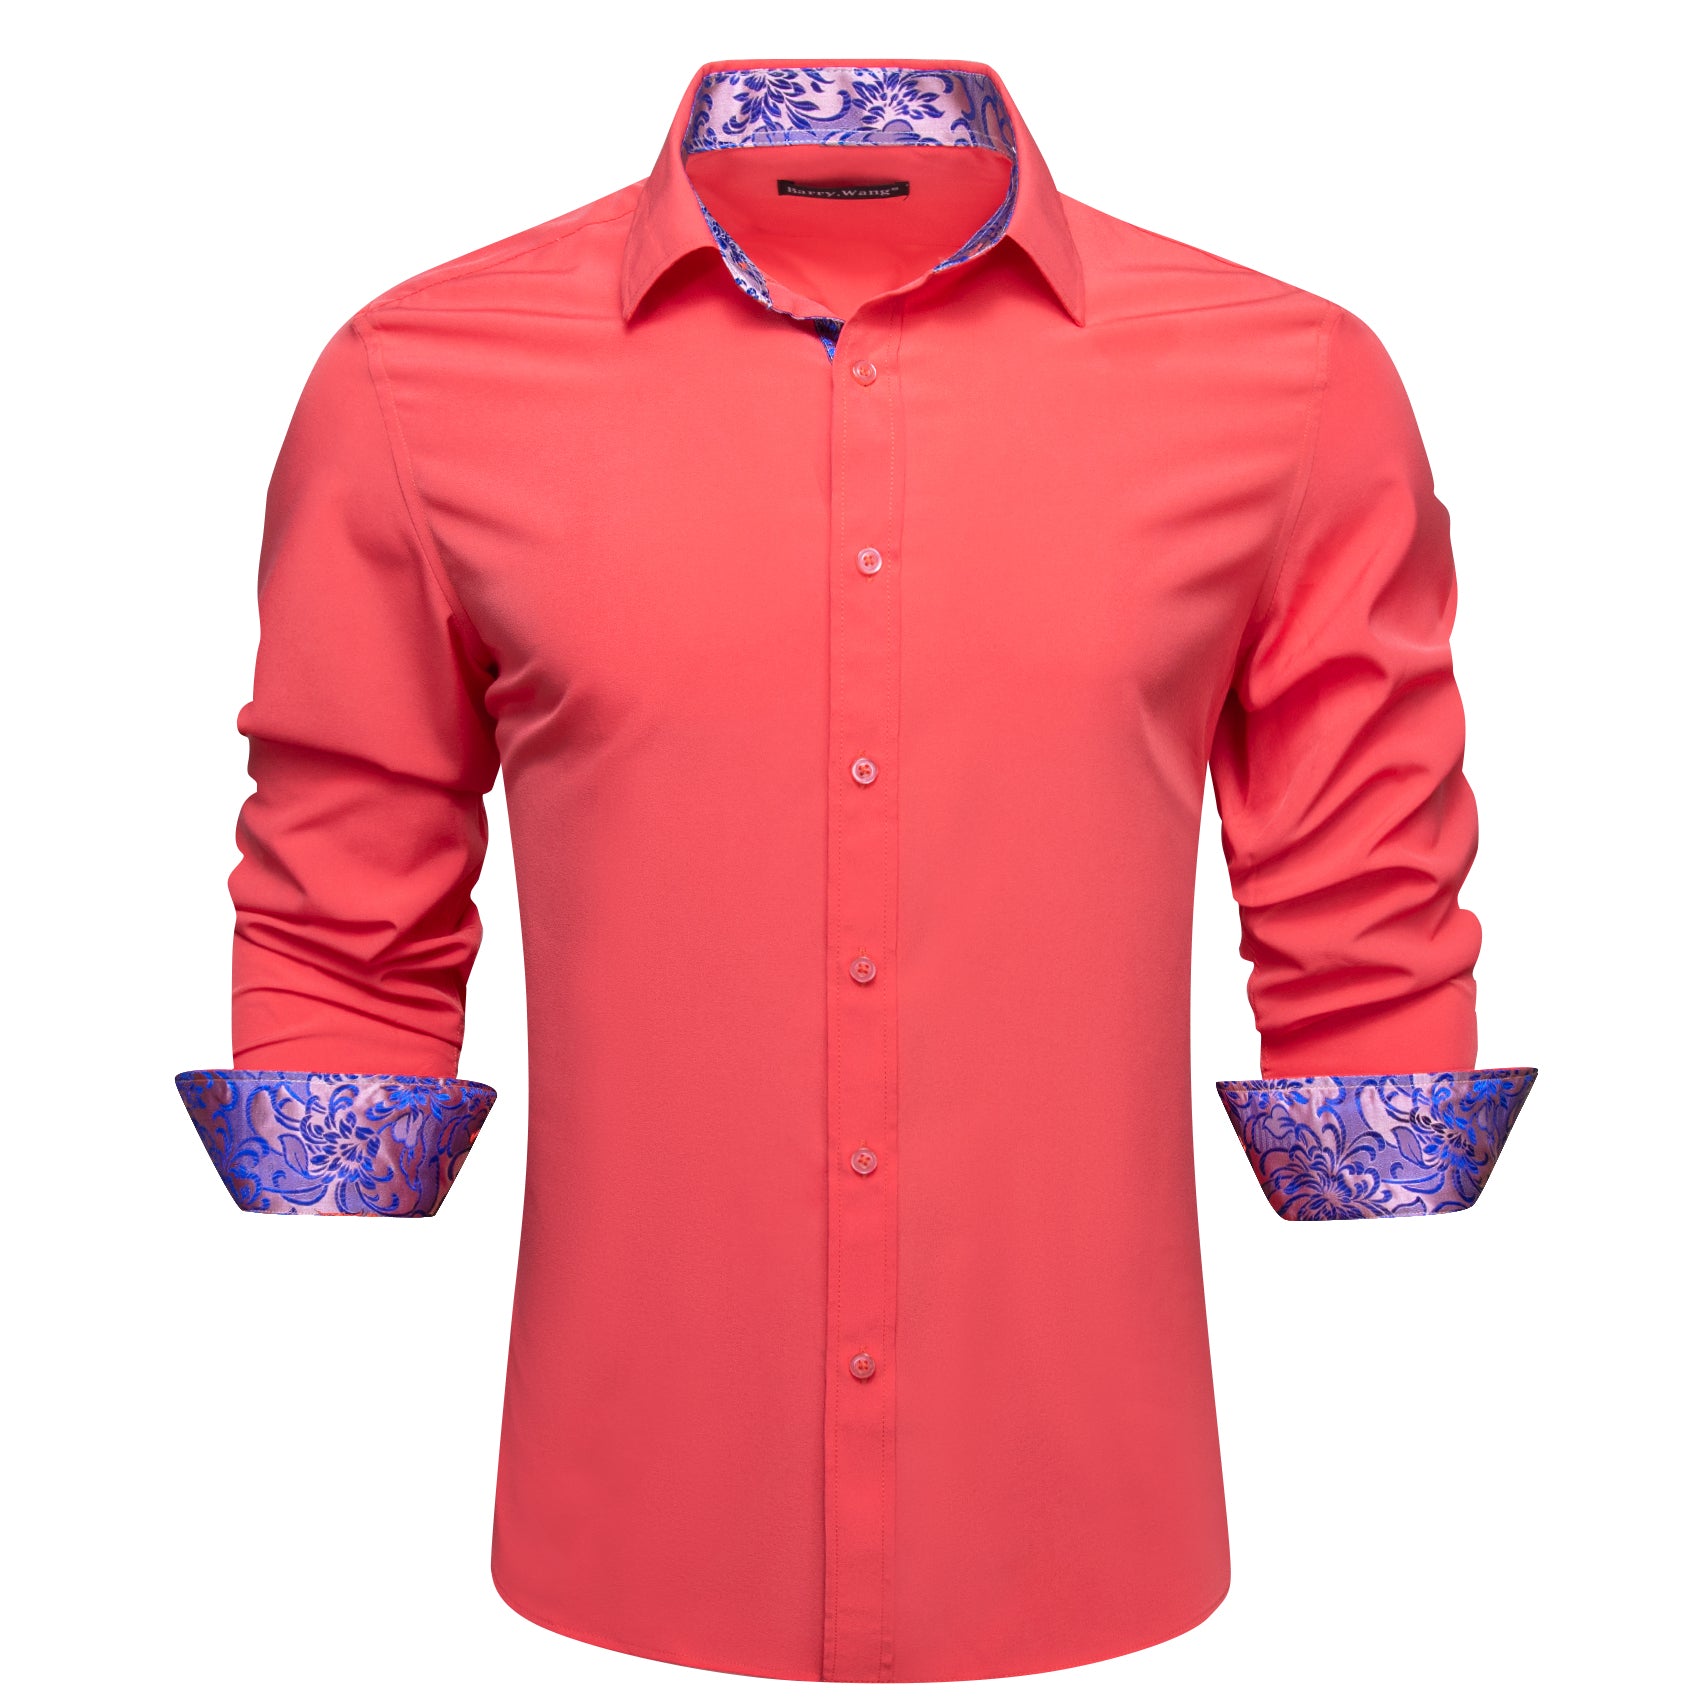 Barry.wang Formal Indian Red Purple Splicing Men's Business Shirt